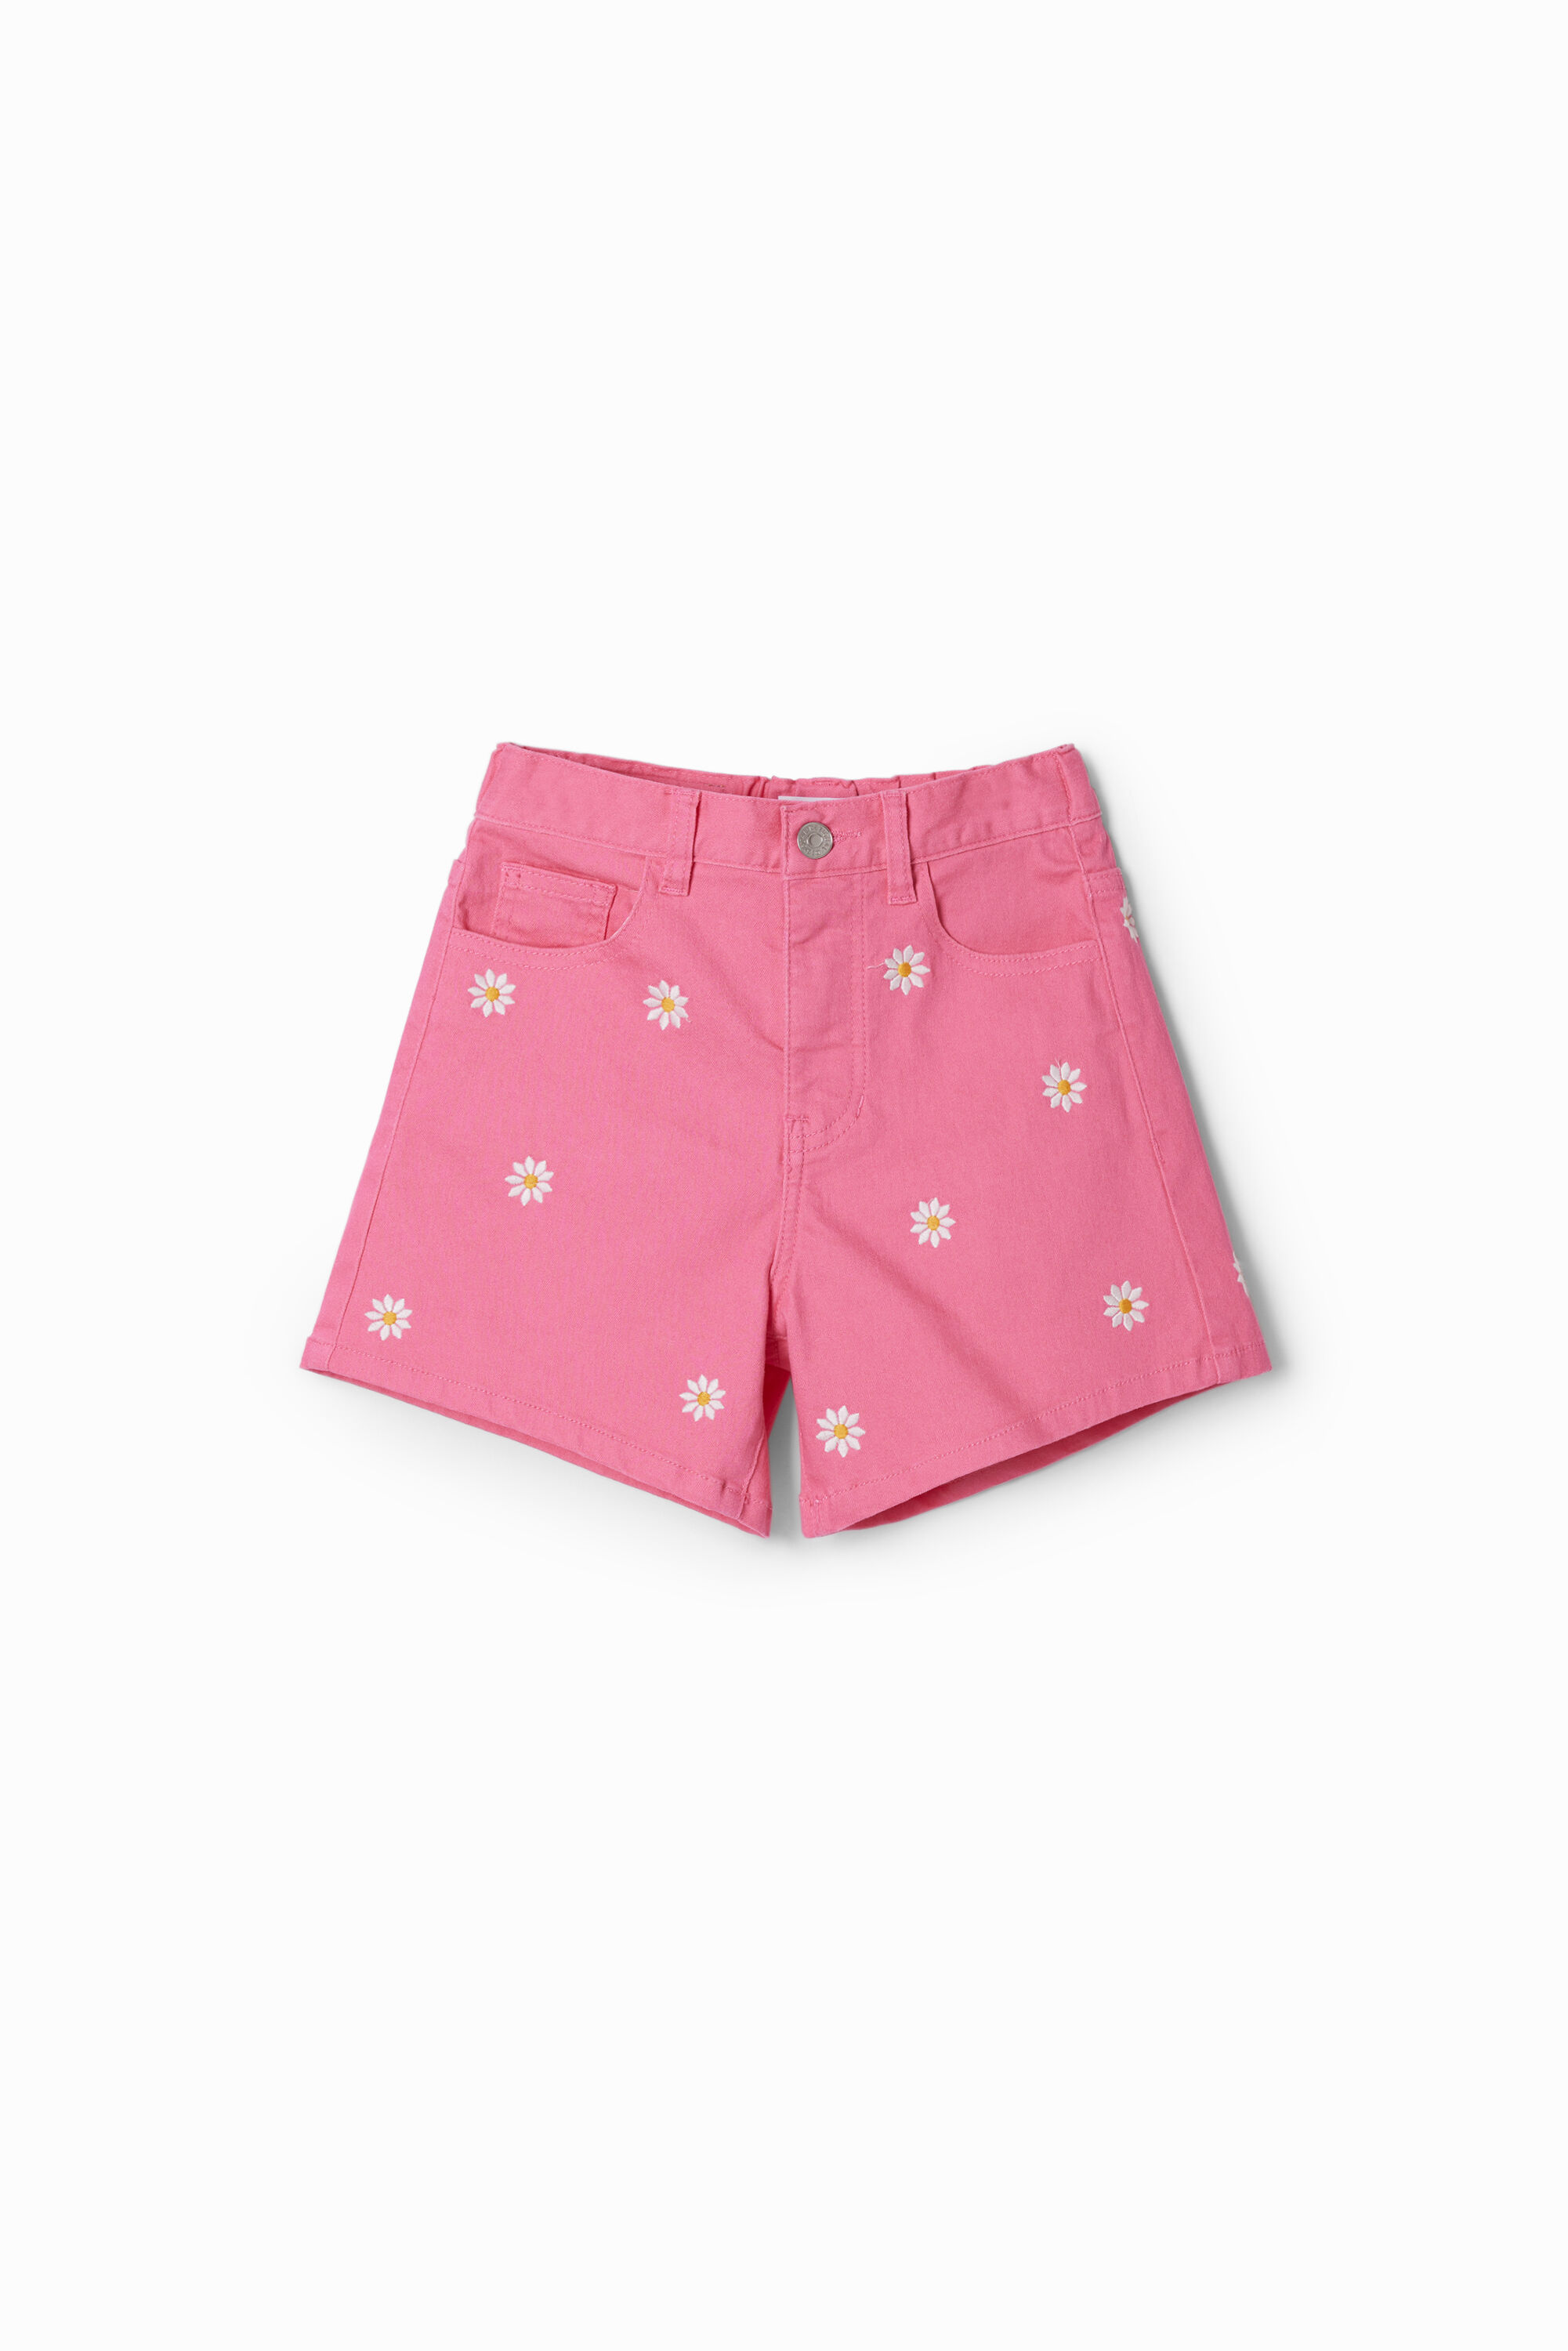 Daisy denim shorts - RED - 5/6